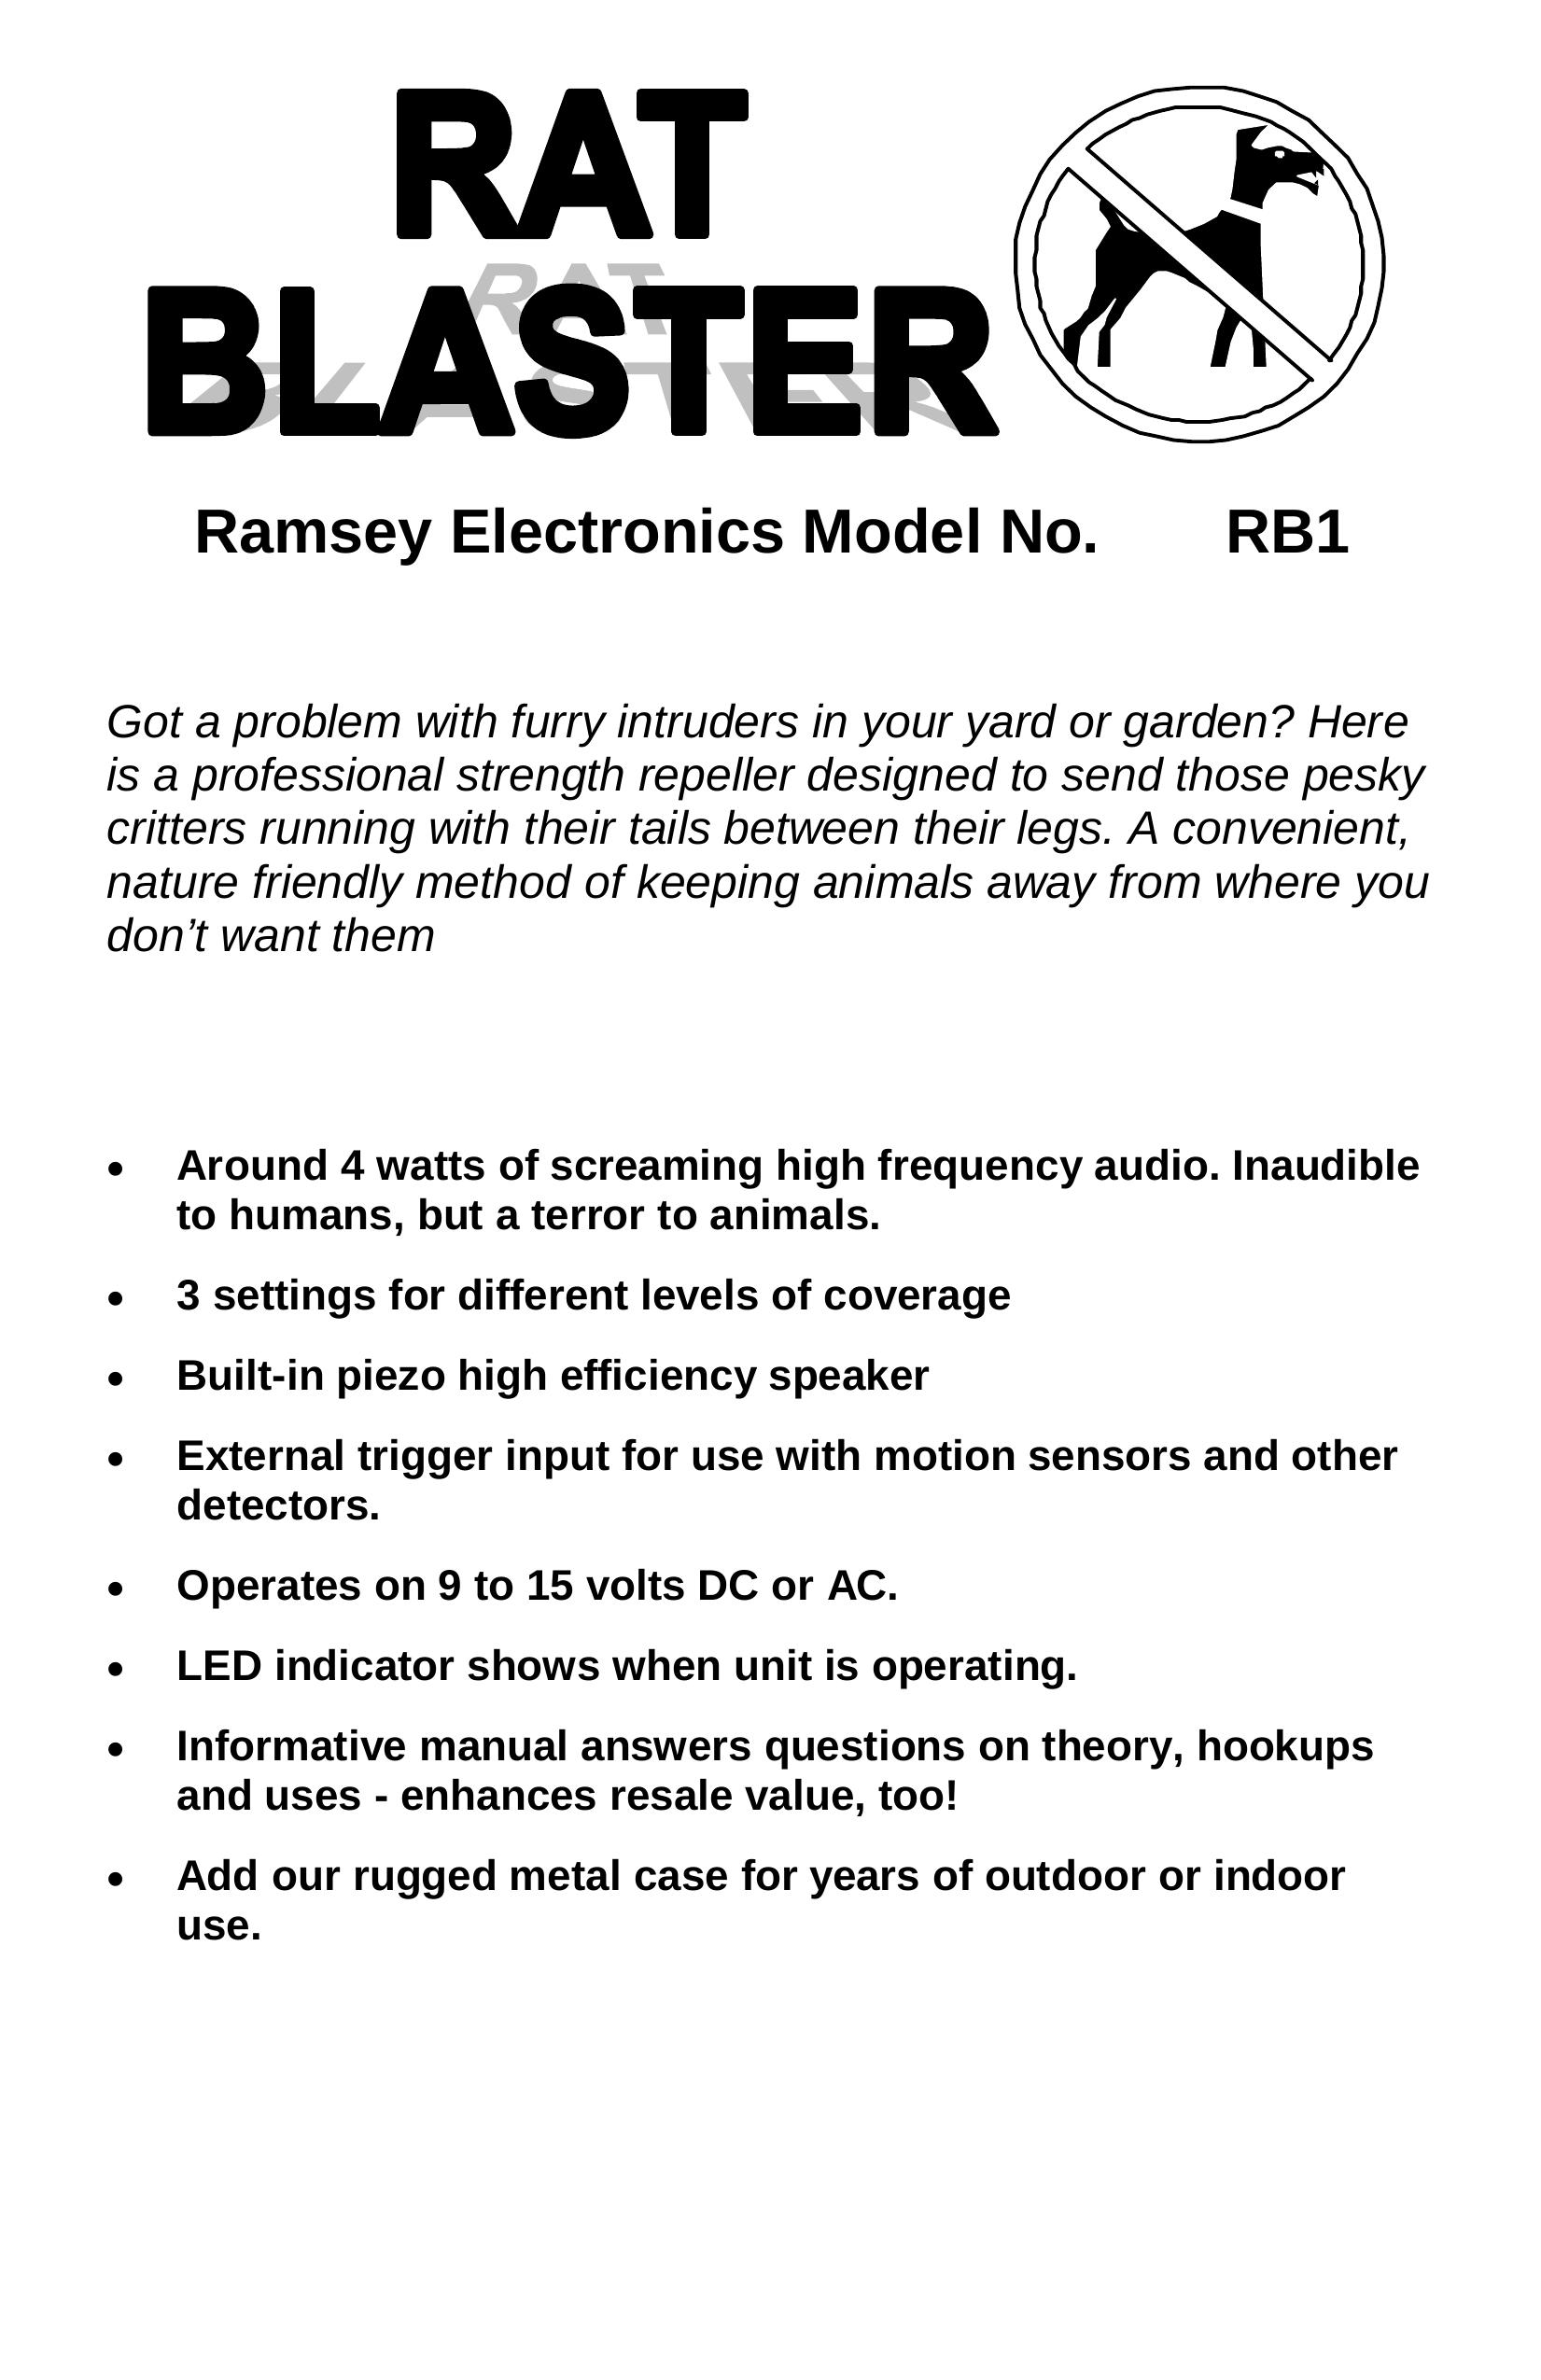 Ramsey Electronics RB1 Pest Control Equipment User Manual